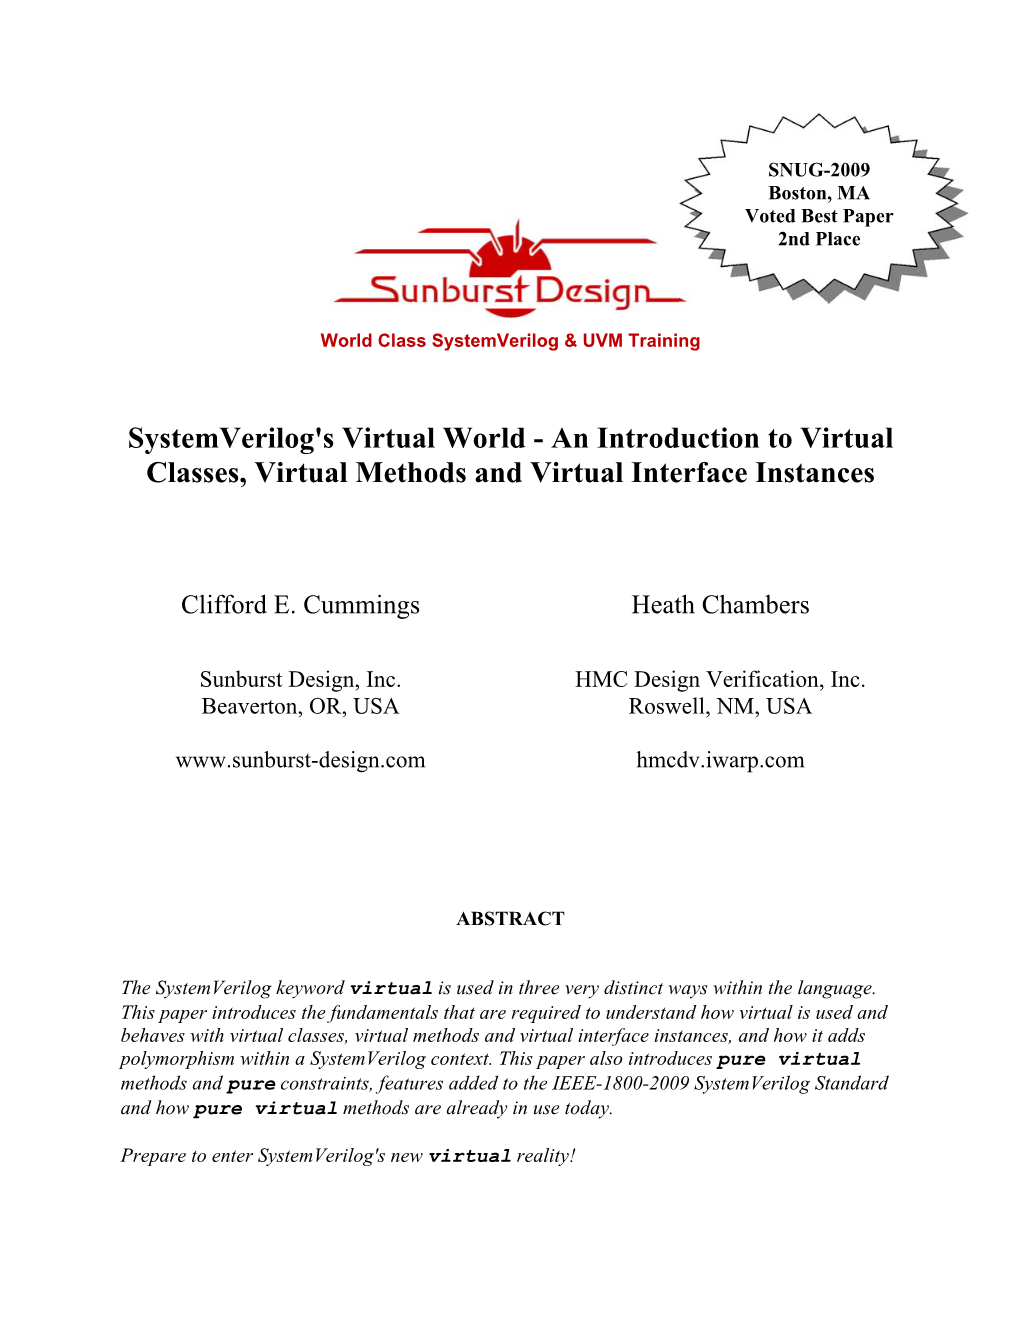 Systemverilog's Virtual World - an Introduction to Virtual Classes, Virtual Methods and Virtual Interface Instances